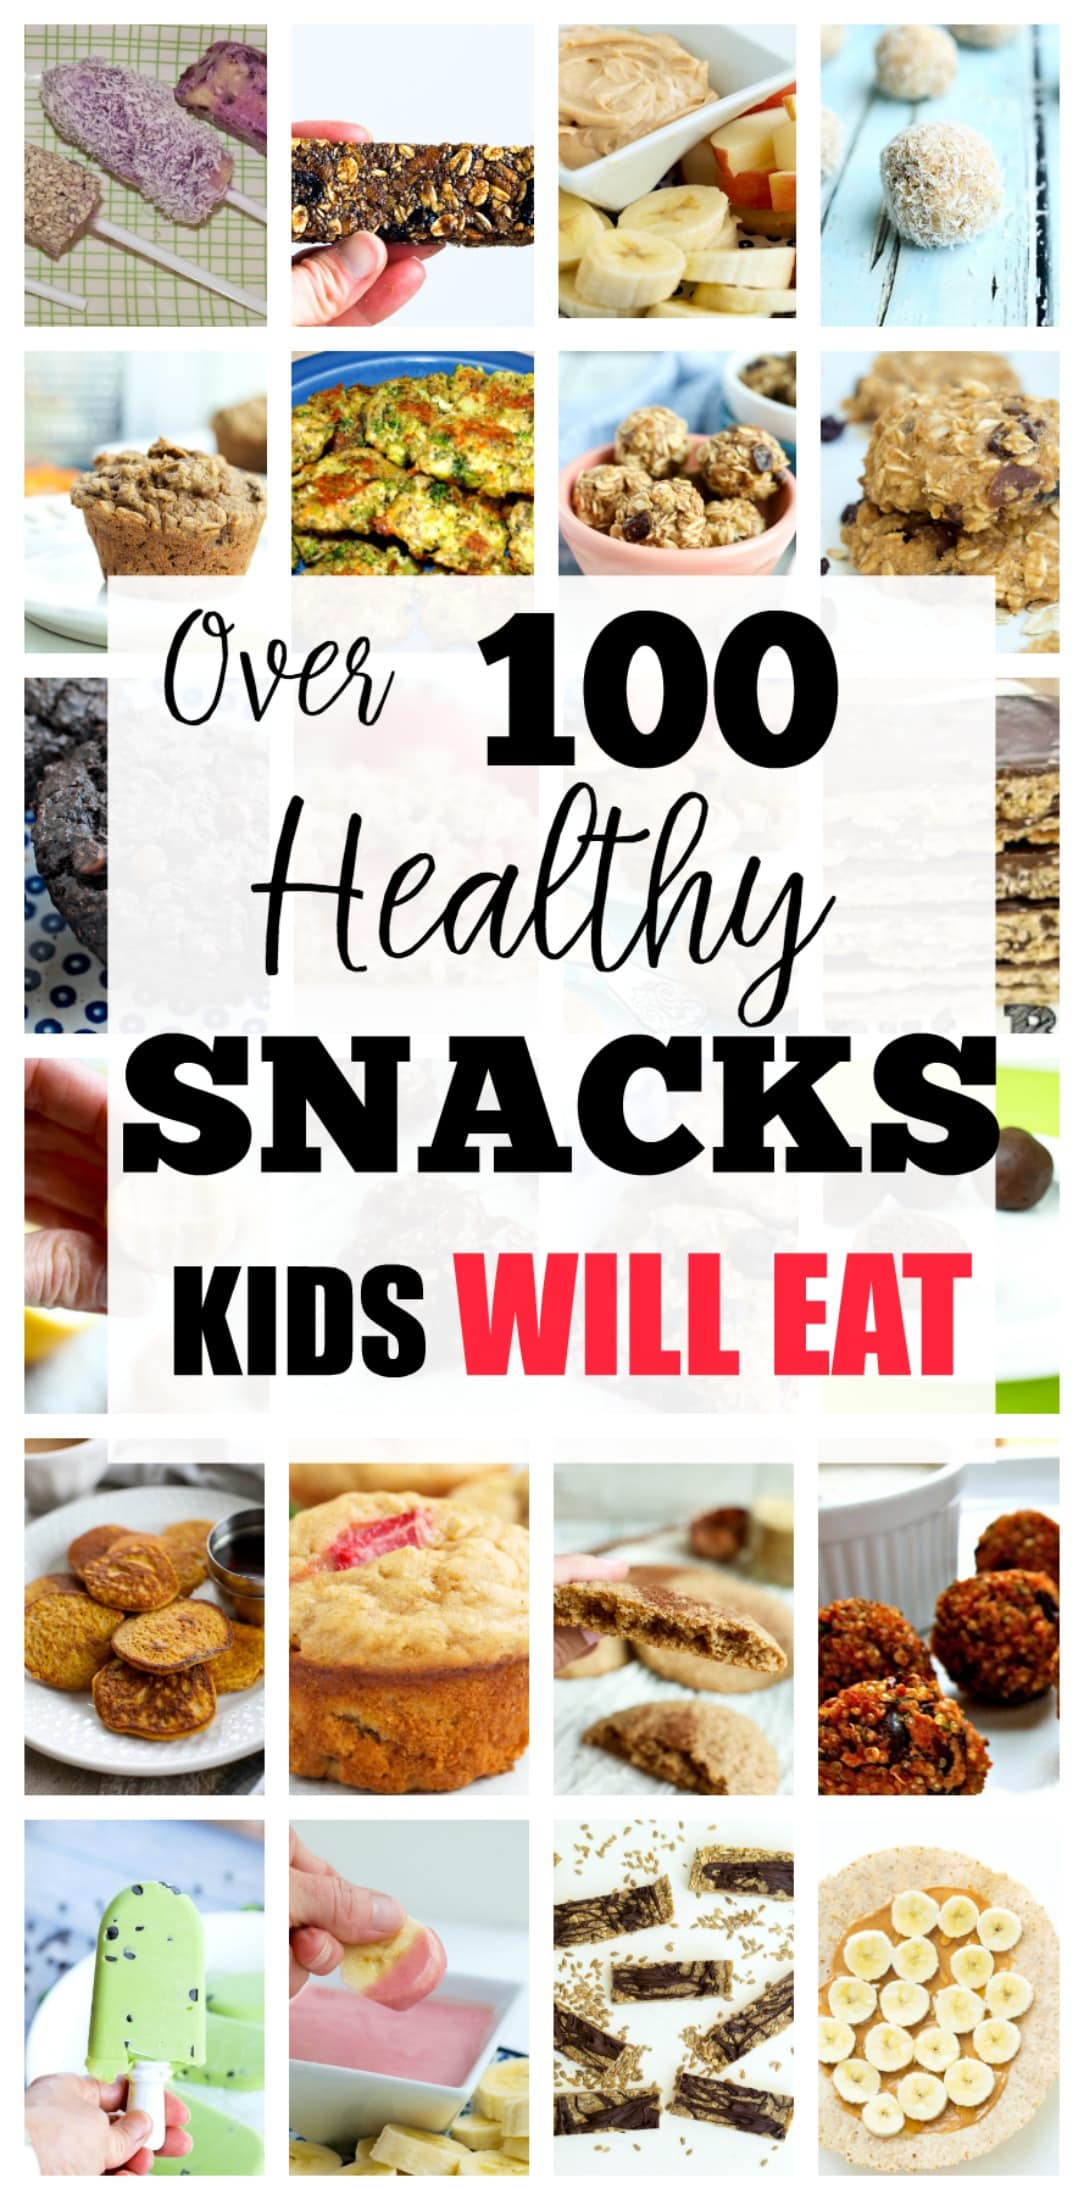 Healthy Snack Ideas for Kids, gluten-free snacks, vegan snacks, all healthy snacks your kids will eat